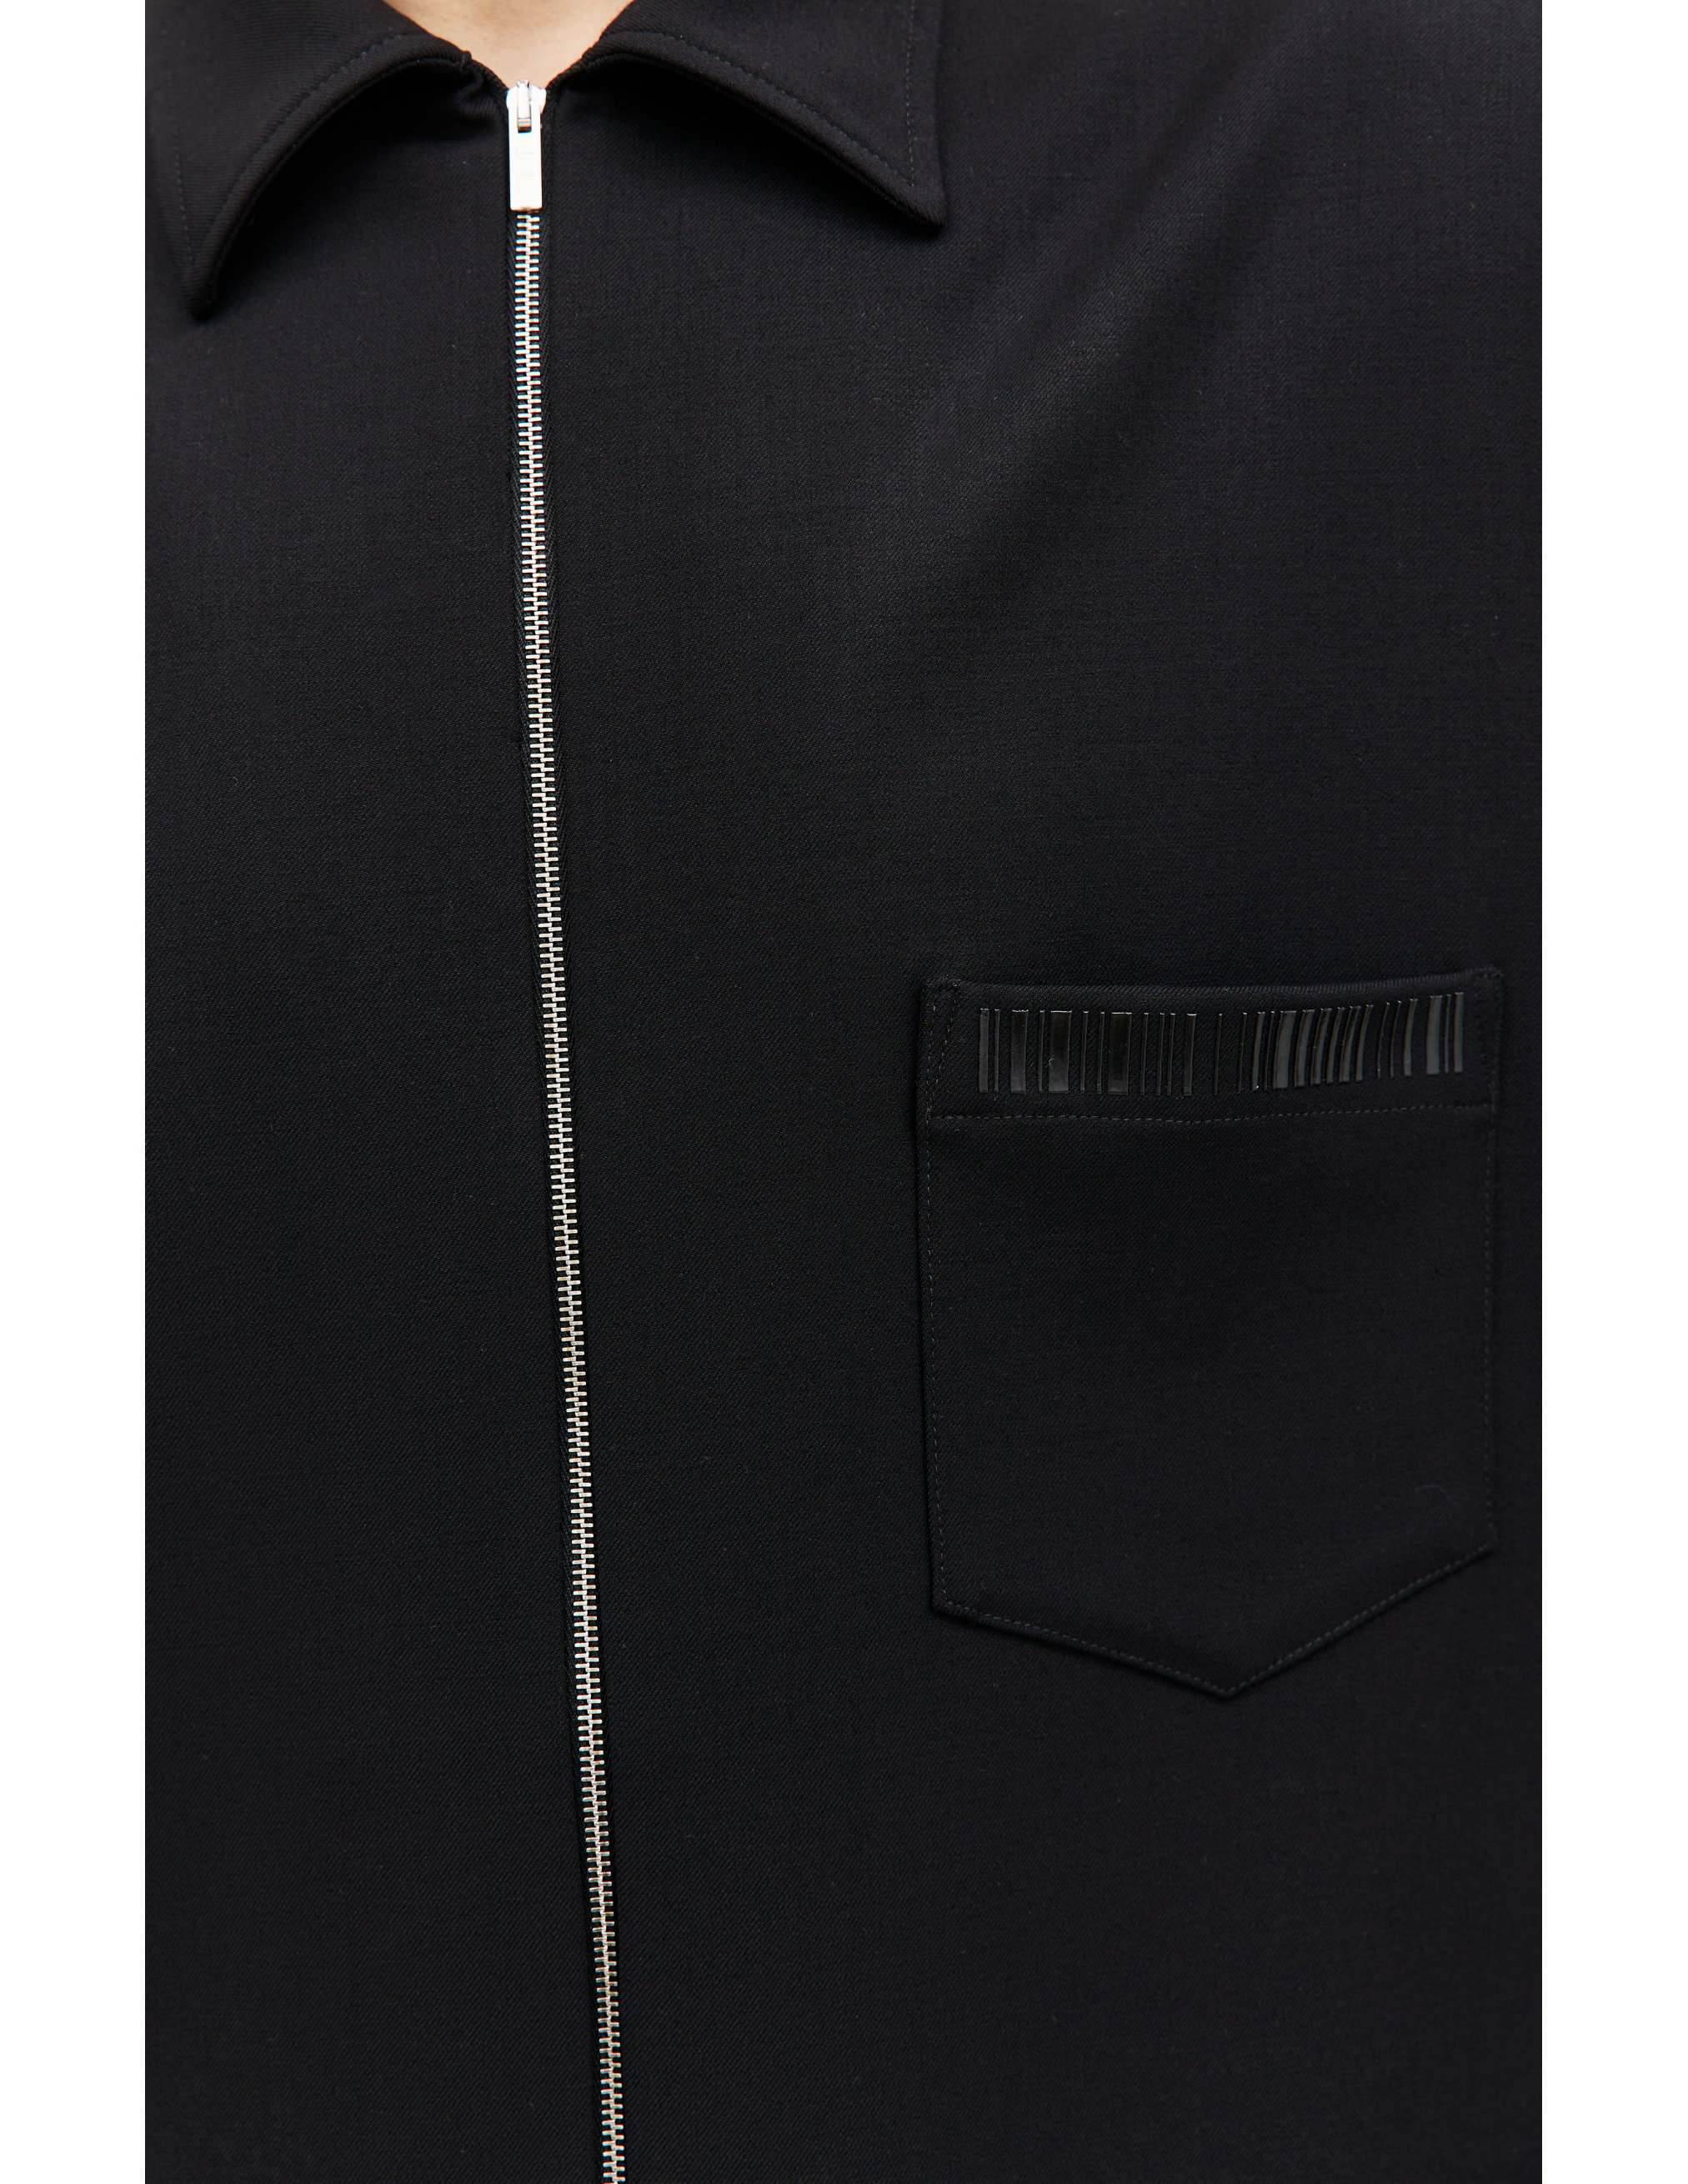 Черная рубашка на молнии VTMNTS VL18SH100B/5340, размер XL VL18SH100B/5340 - фото 4